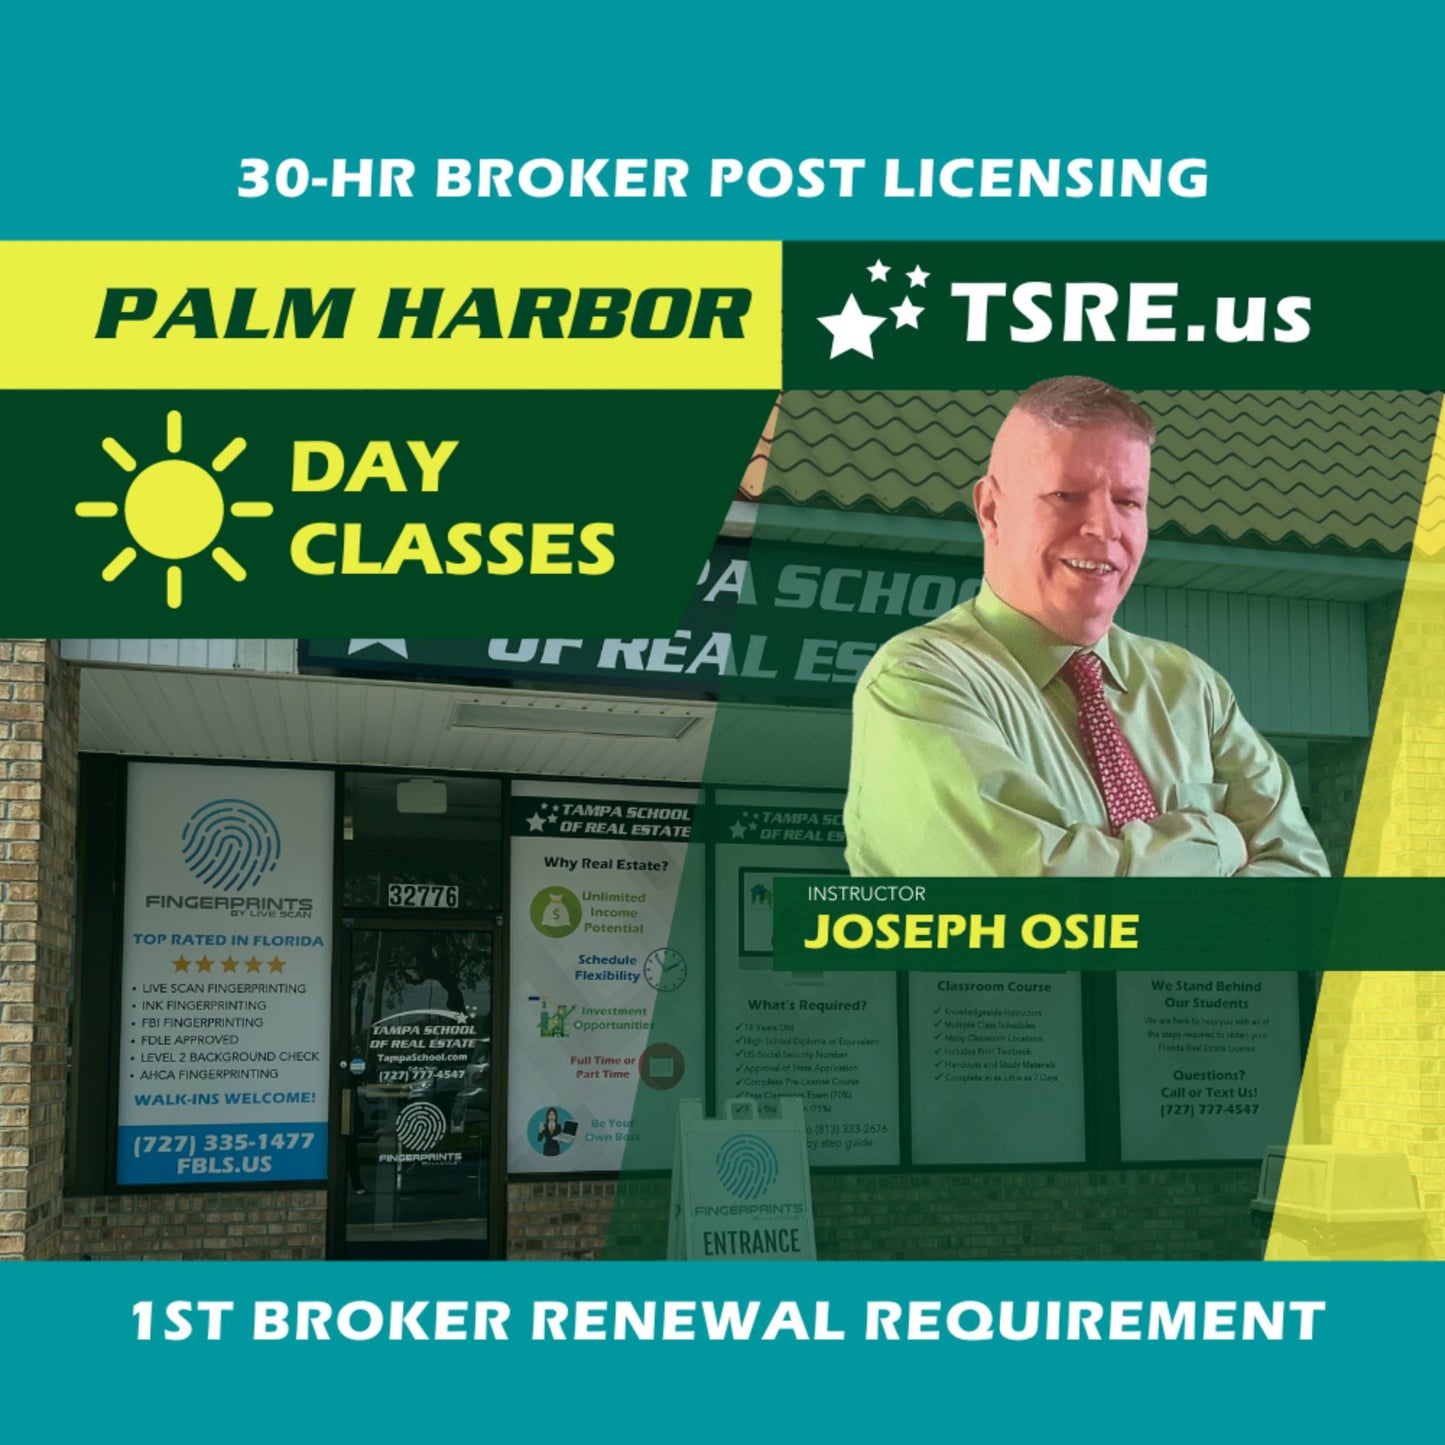 Palm Harbor | Sep 25 9:00am | BKMGMT TSRE Palm Harbor | Tampa School of Real Estate 